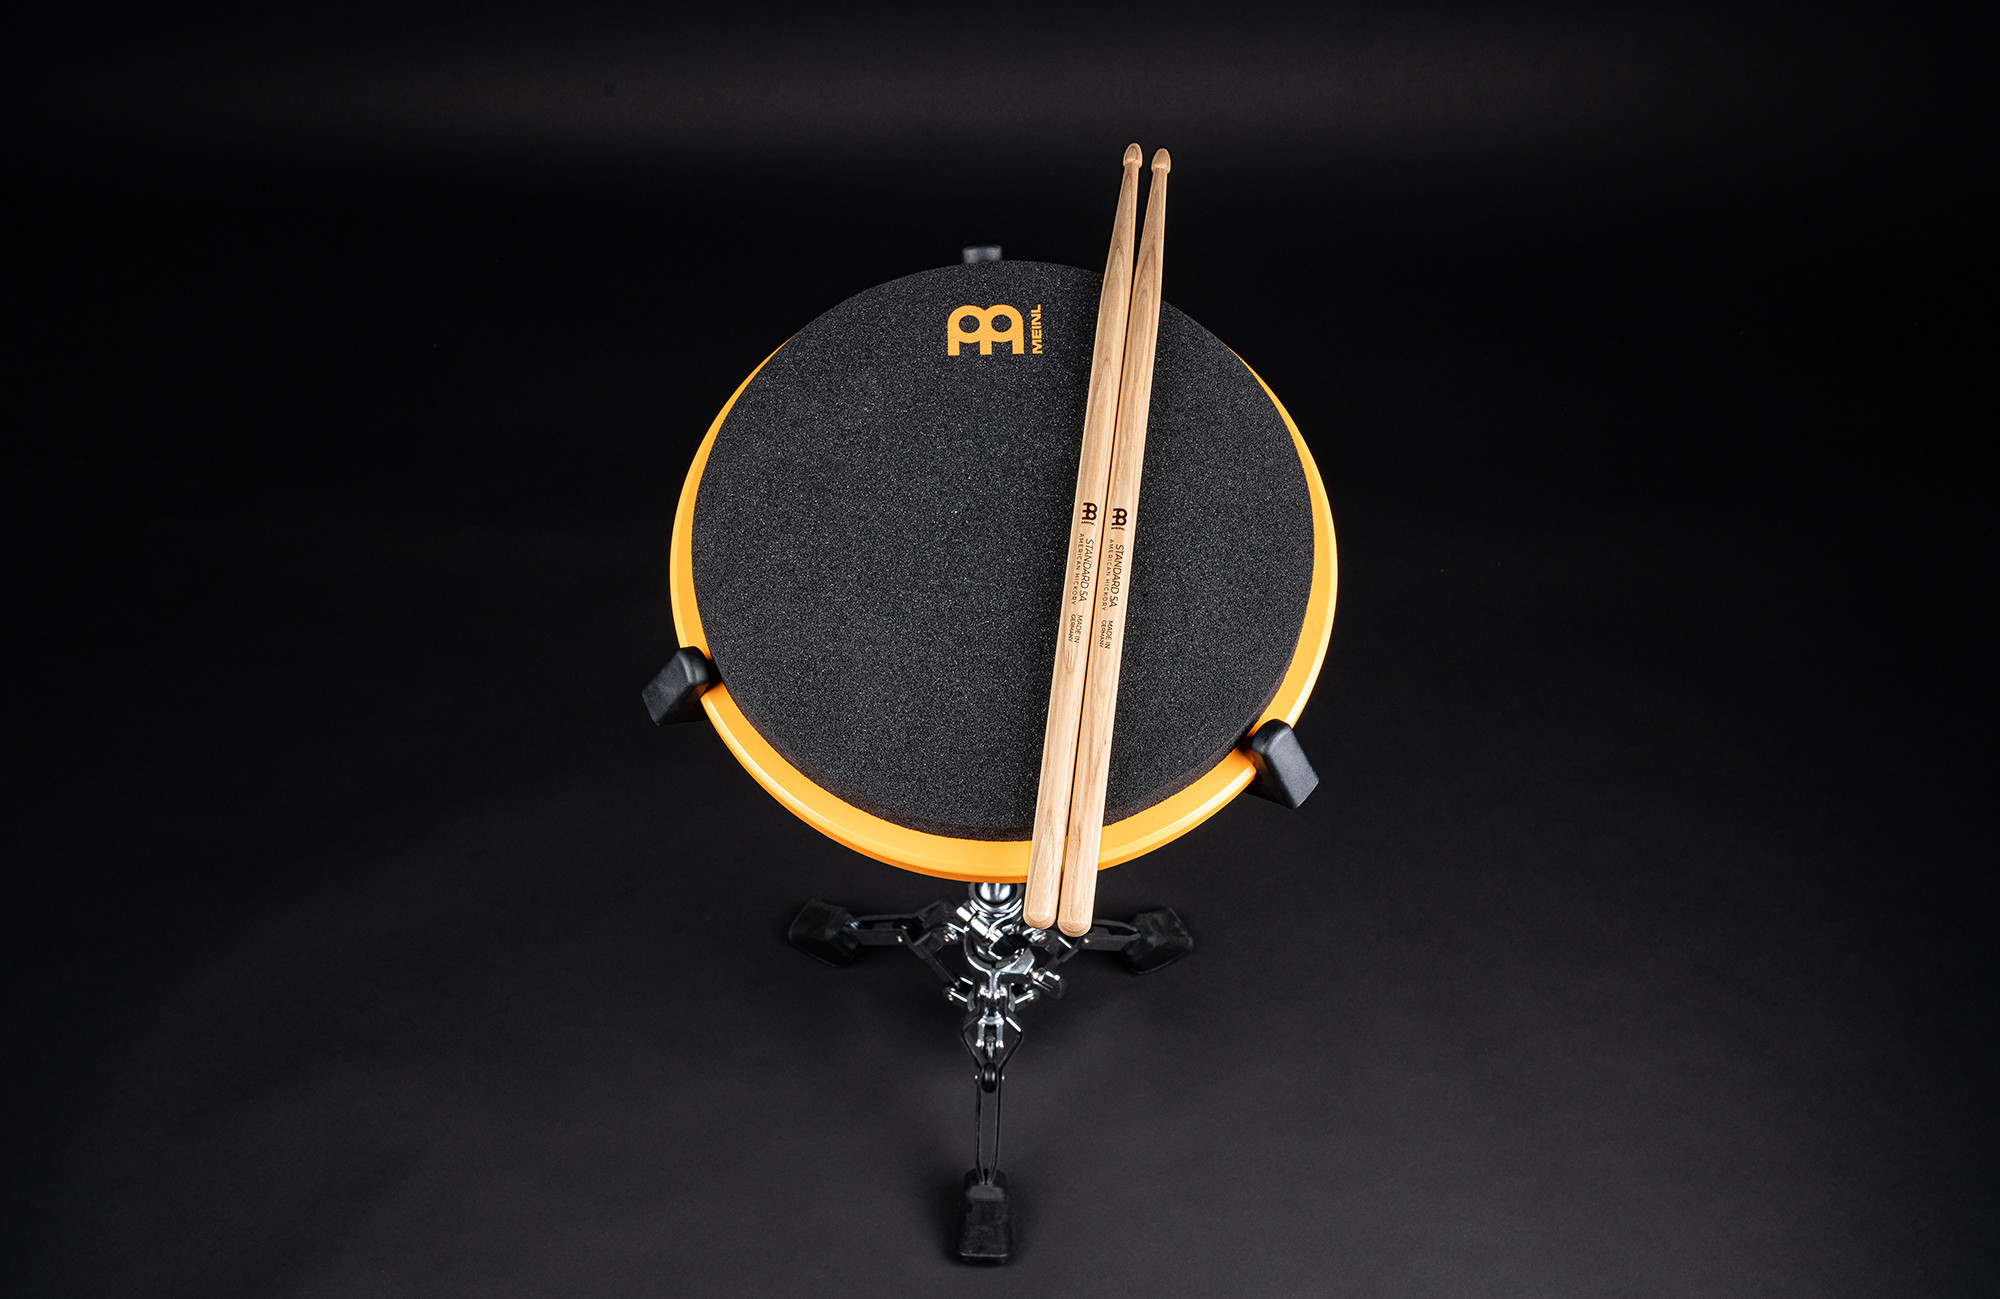 MEINL Cymbals Marshmallow Practice Pad - Orange 12"